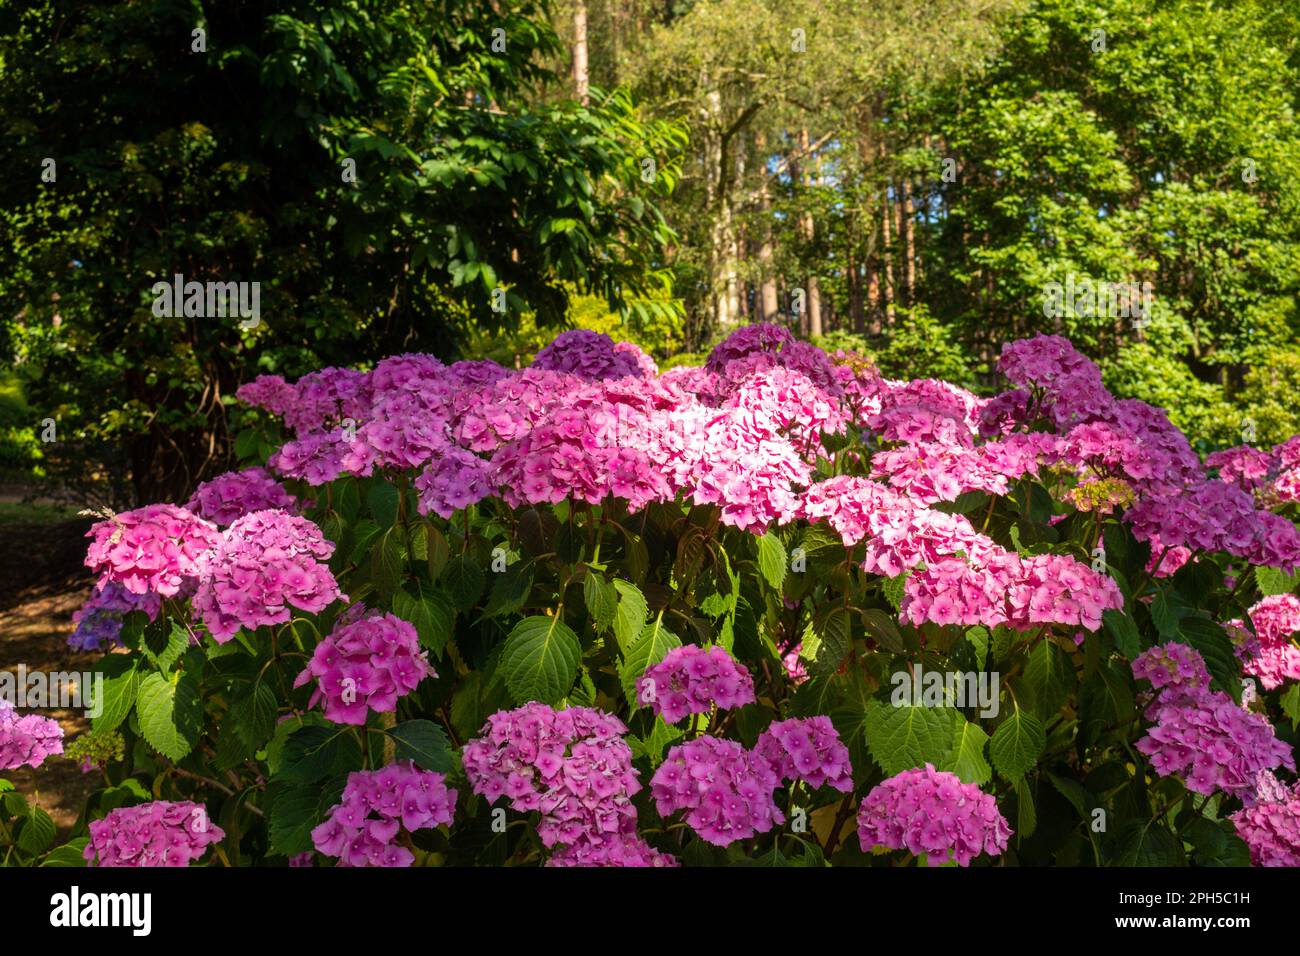 Rosa Hortensien in den Valley Gardens, Virginia Water, Surry, Großbritannien Stockfoto